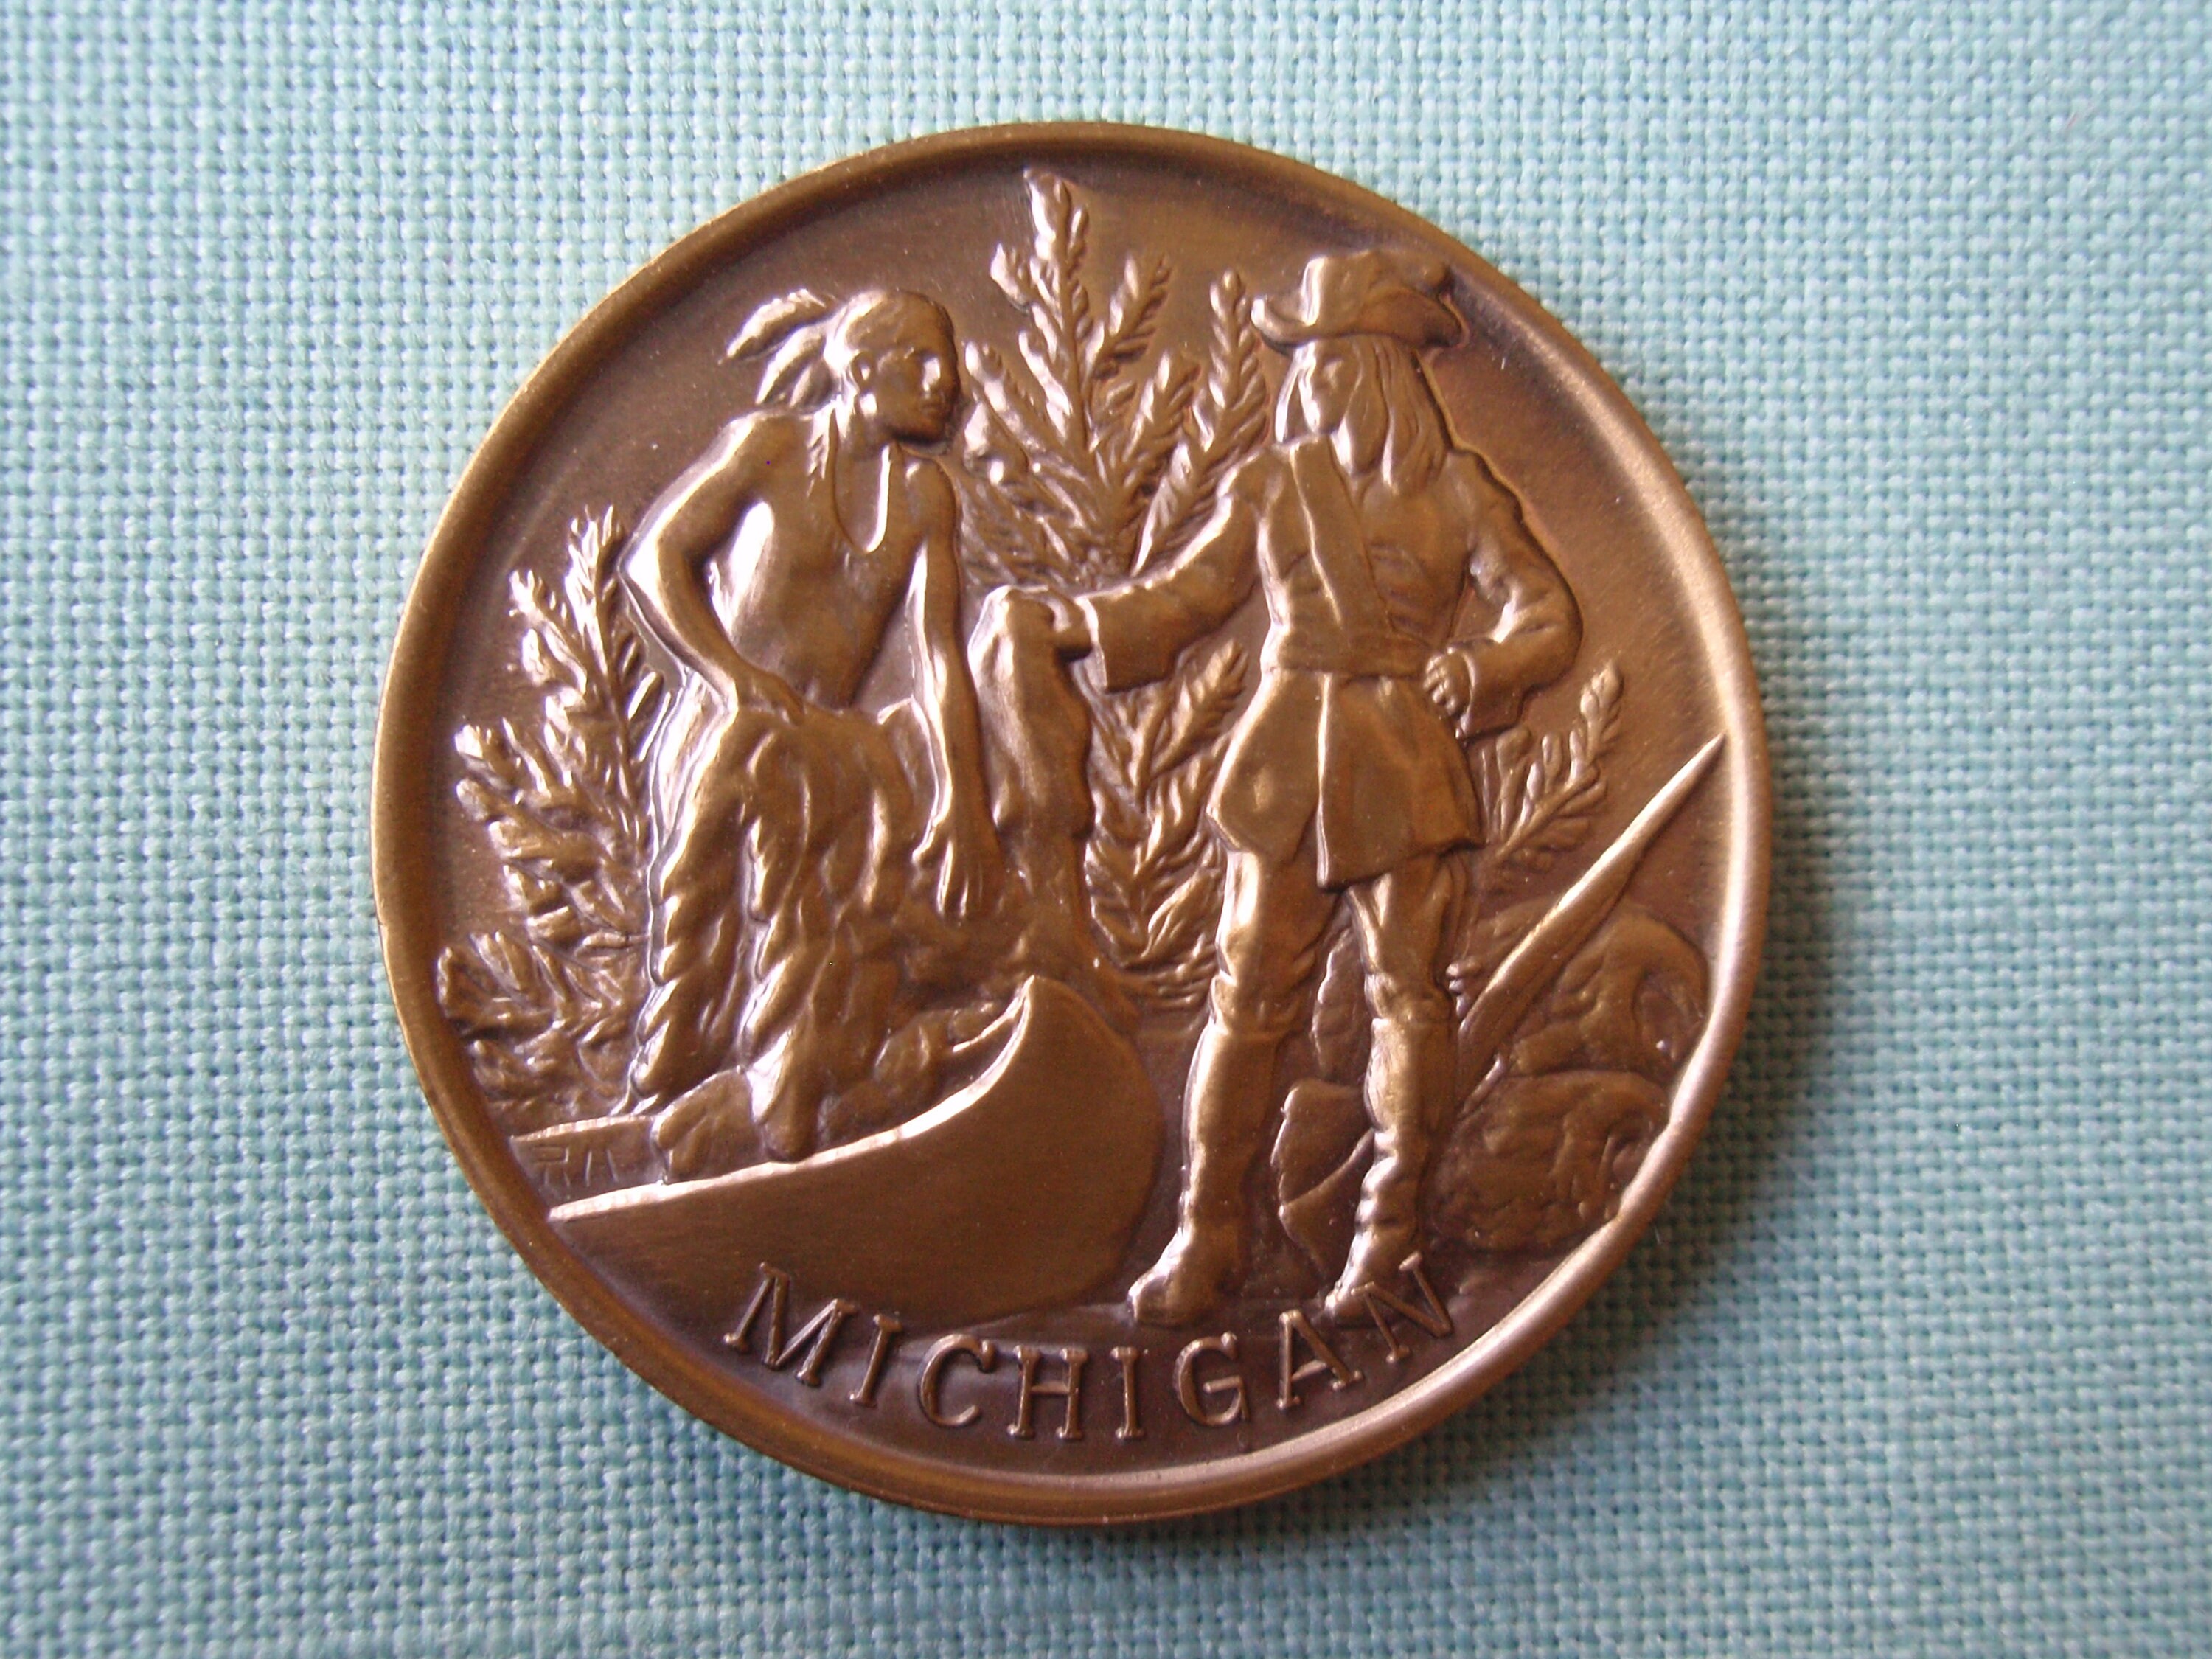 1776 to 1976 Brass Medallion US Bicentenial Official Michigan Medallion 1 12 Inch Medal Memorabilia Souvenir Events f1780